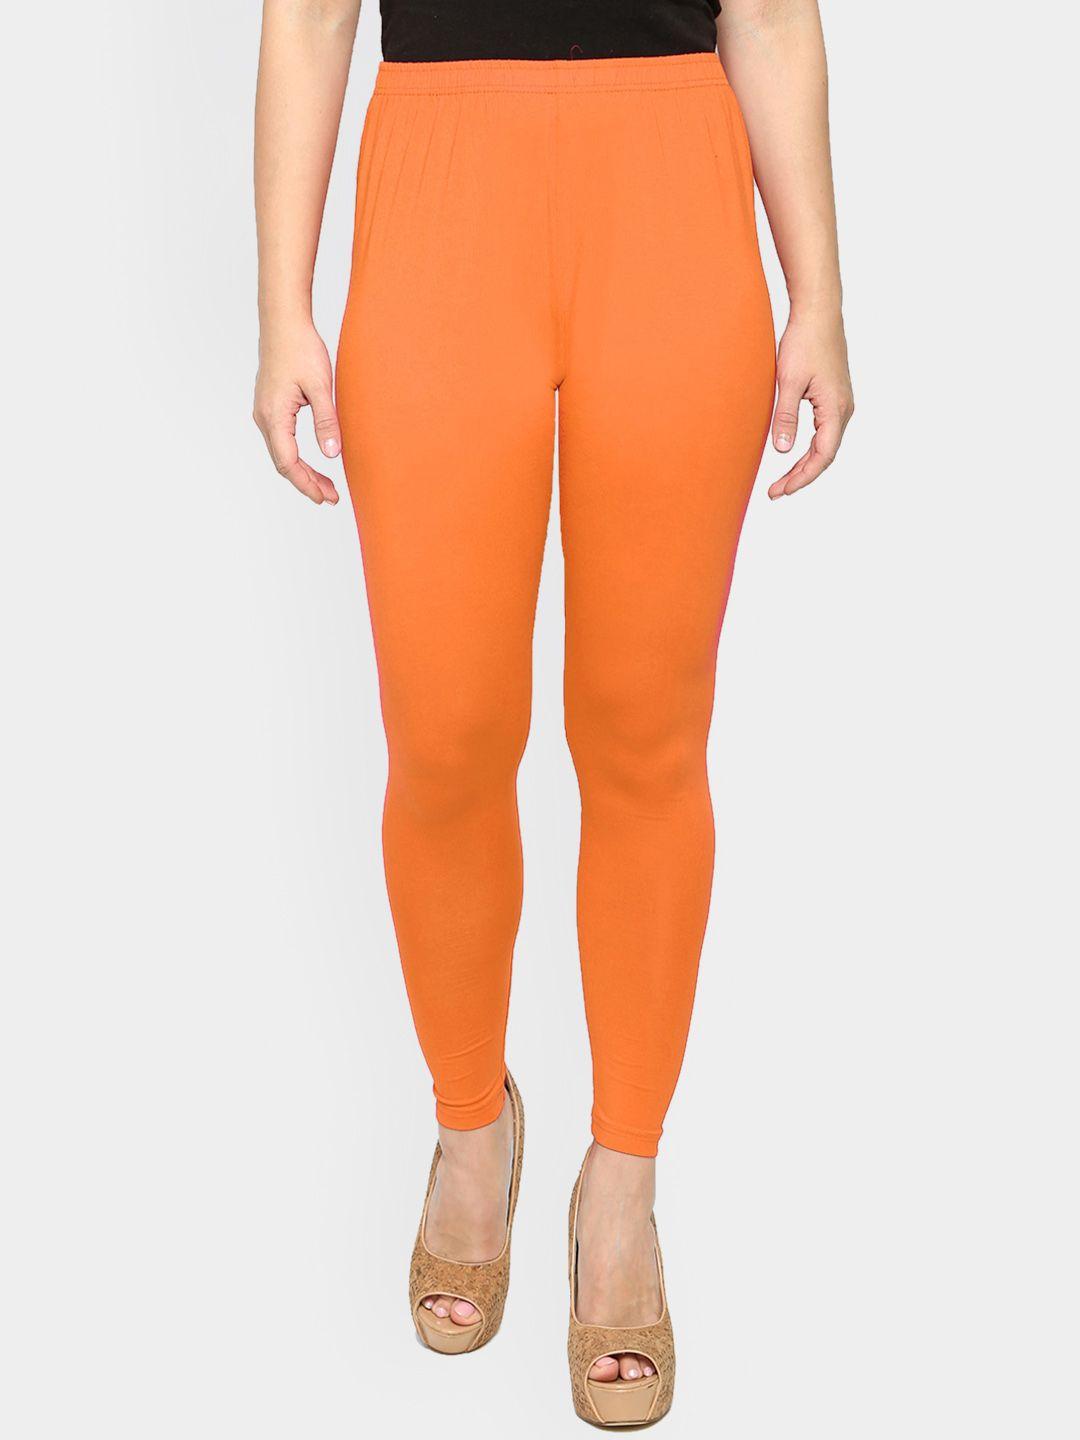 ms.lingies women orange solid ankle-length leggings